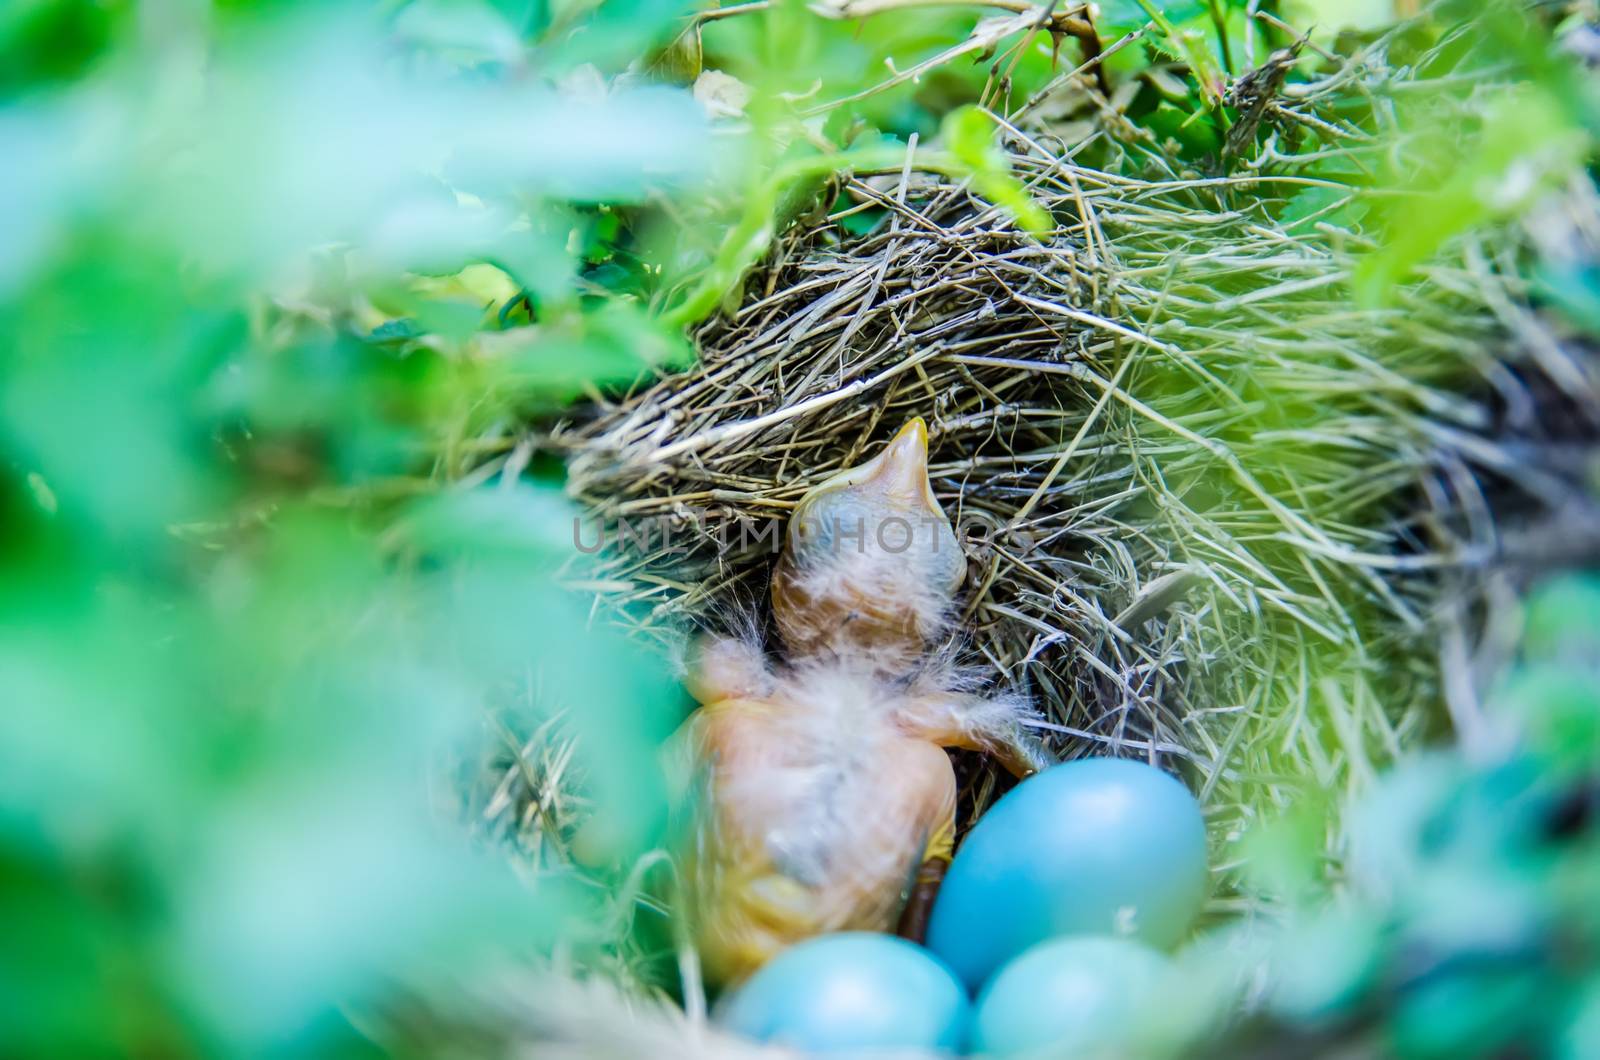 Babies Streak-eared Bulbul in nest with blue eggs by digidreamgrafix